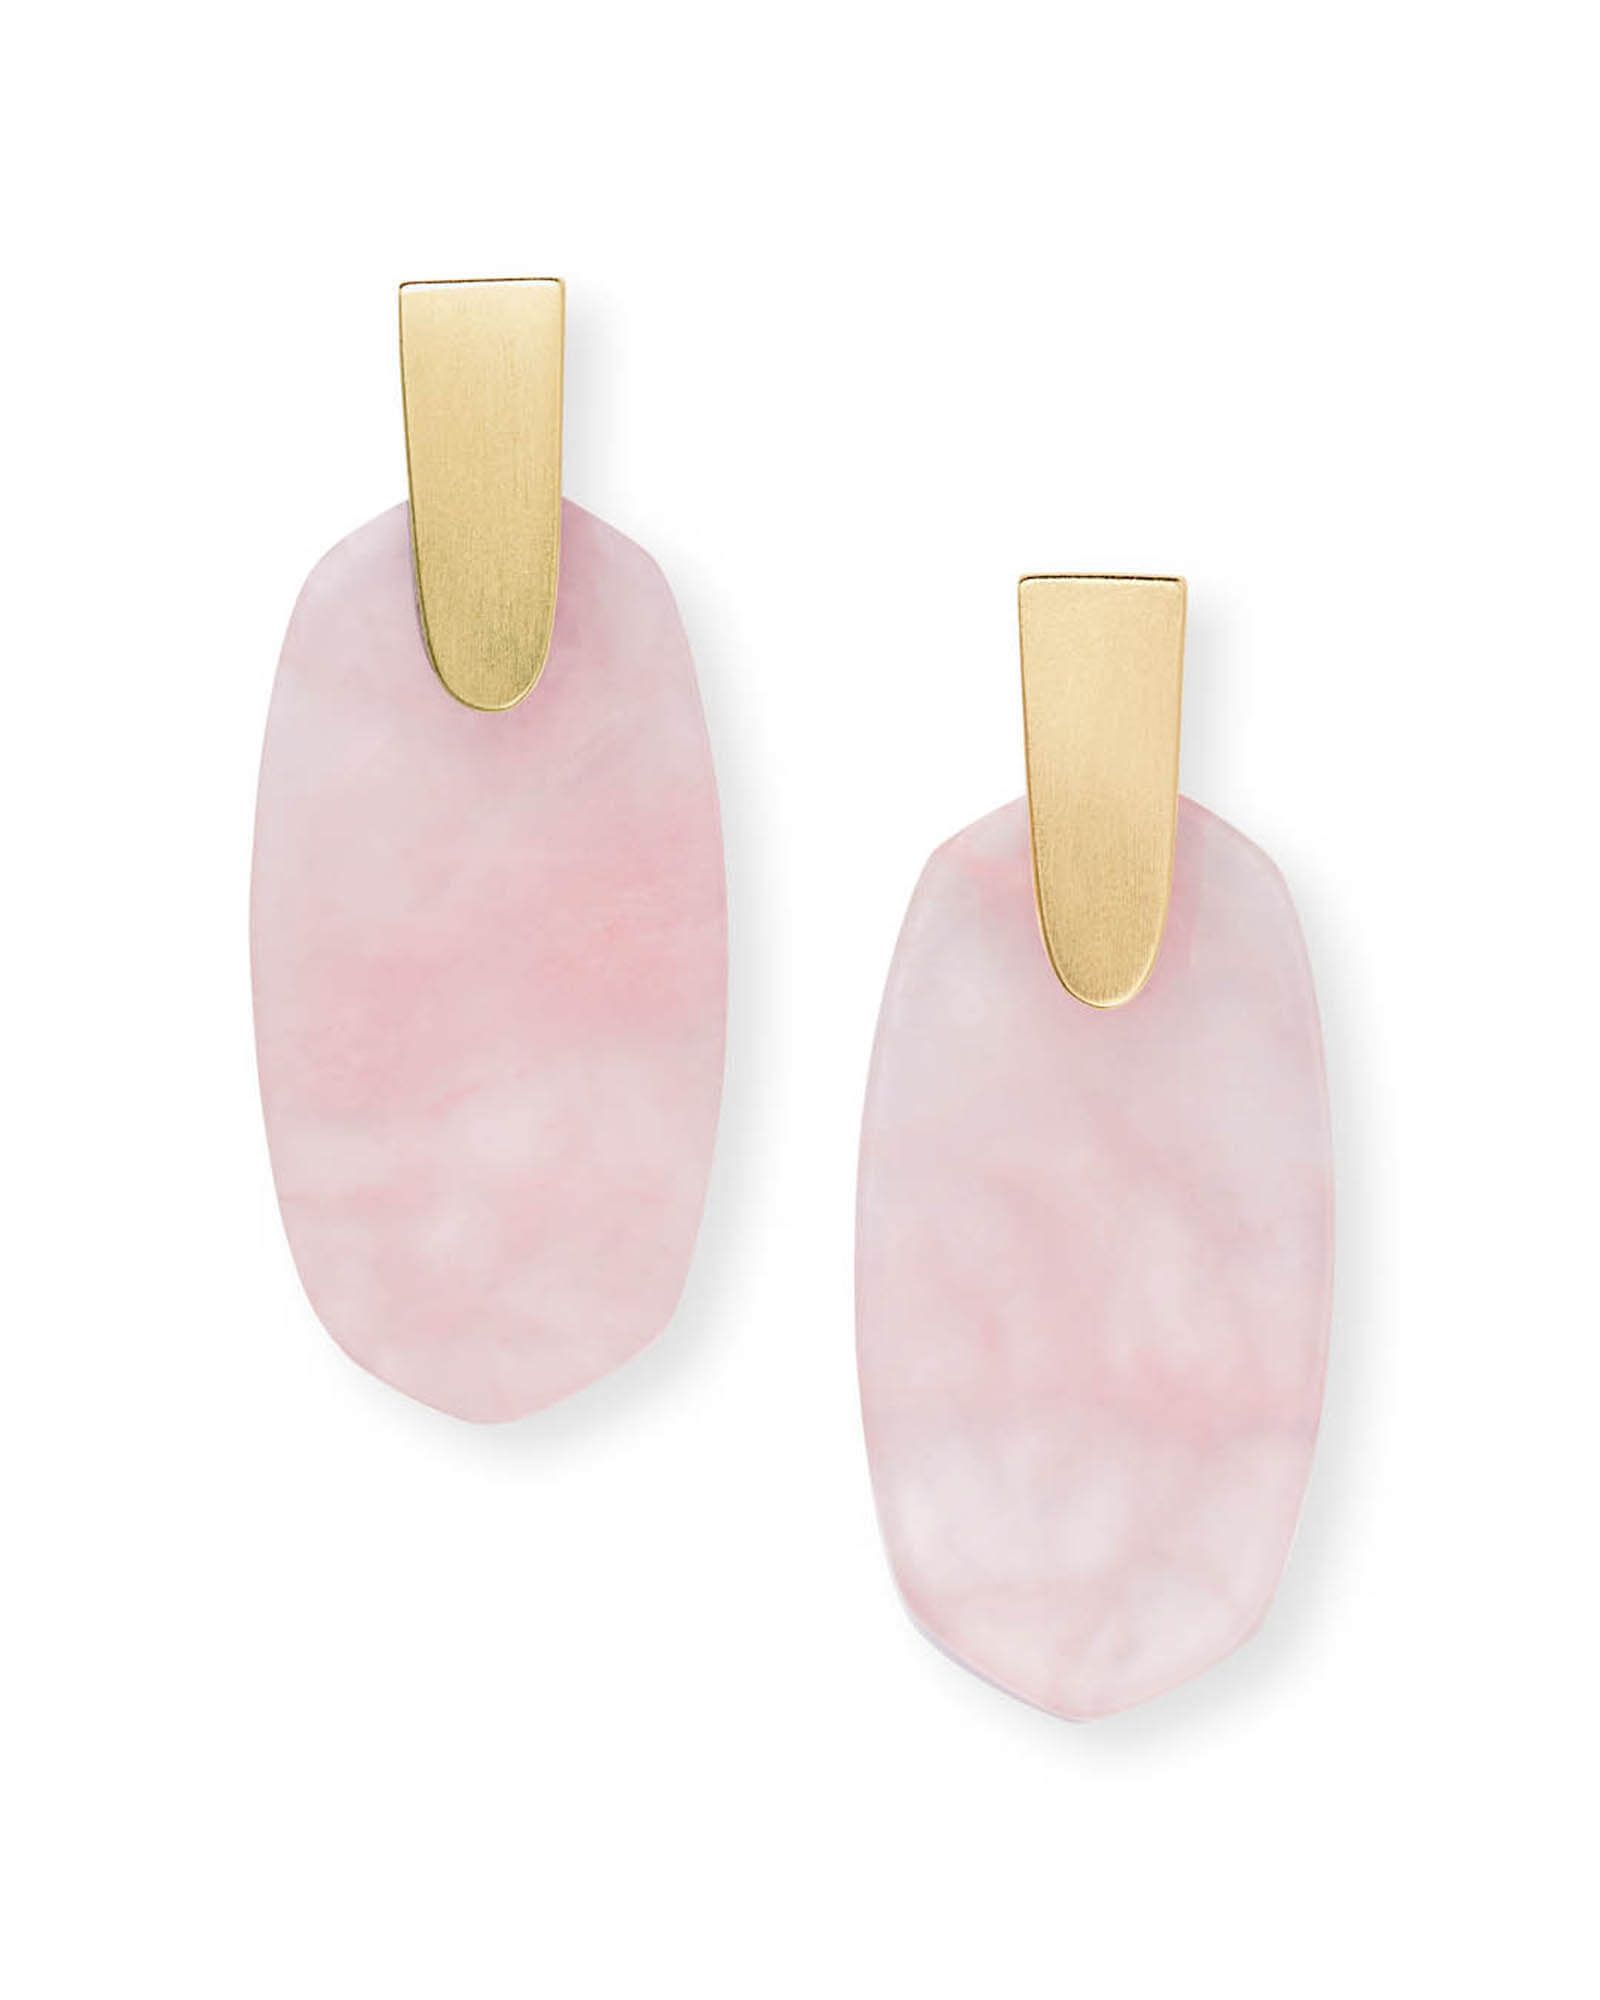 Aragon Gold Drop Earrings in Rose Quartz | Kendra Scott